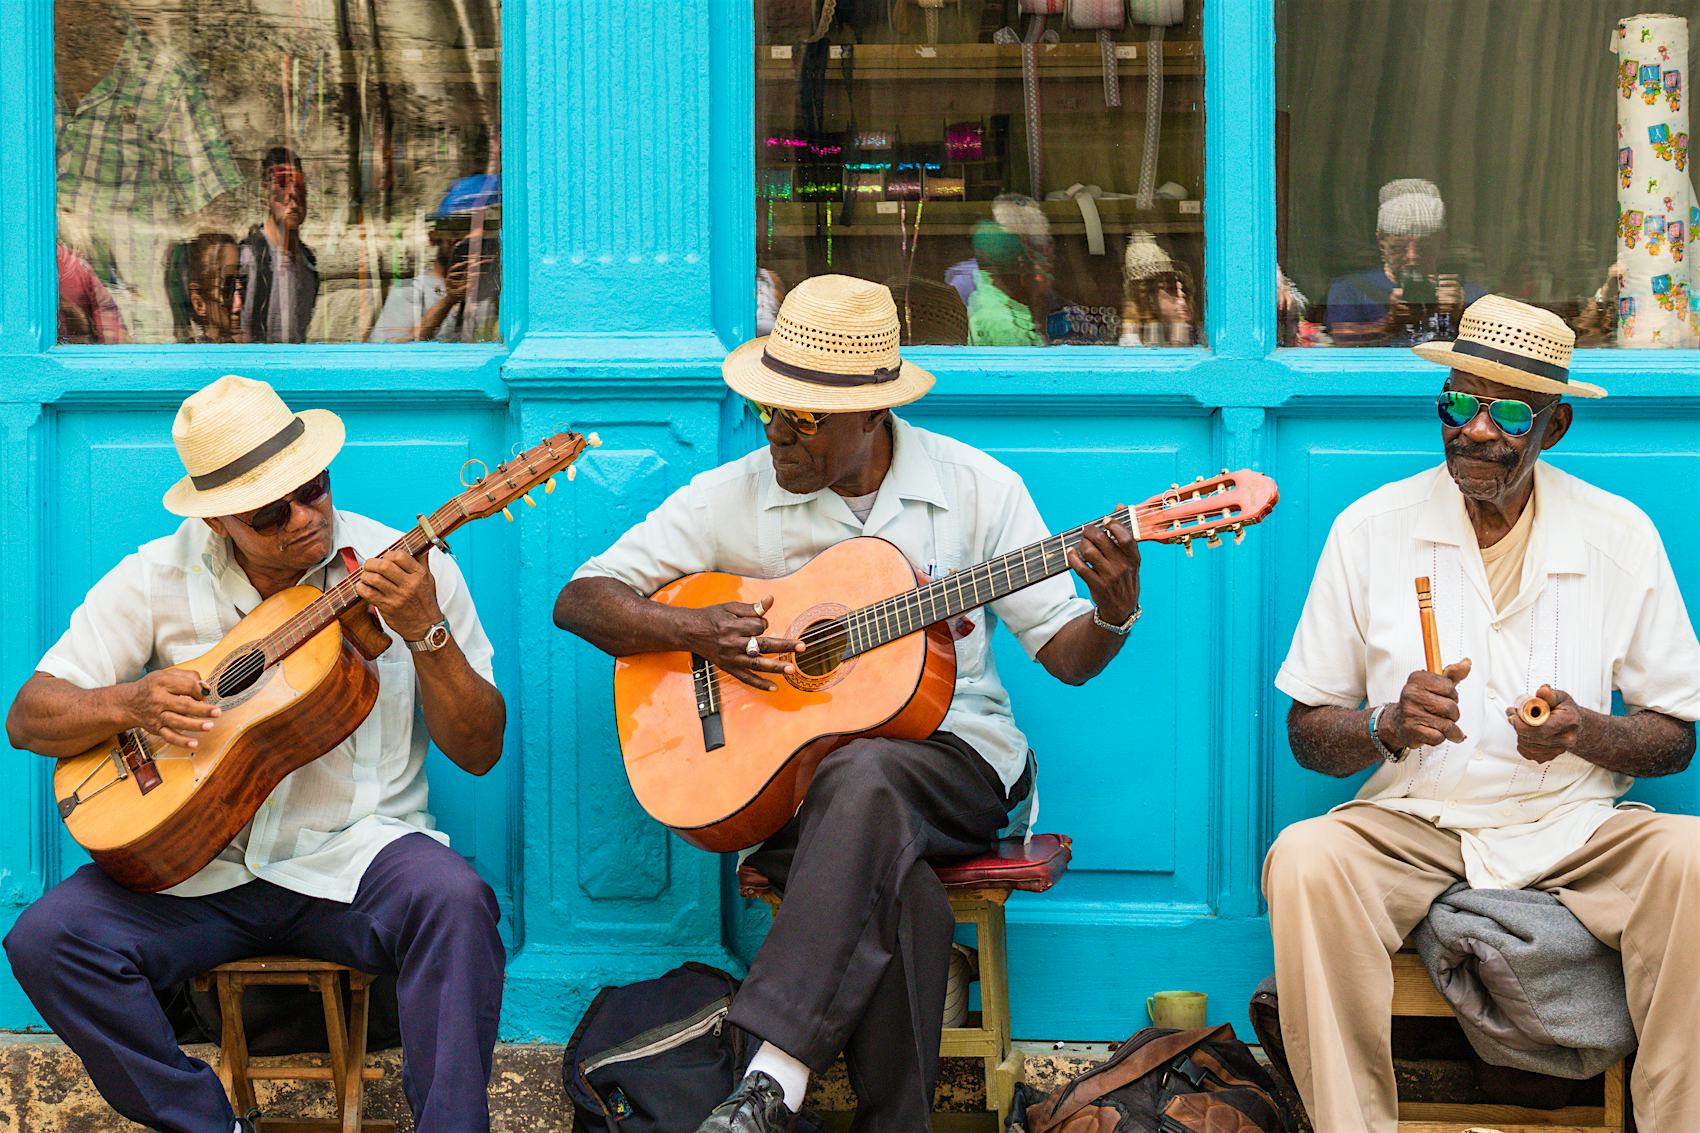 Elderly street musicians playing in Havana